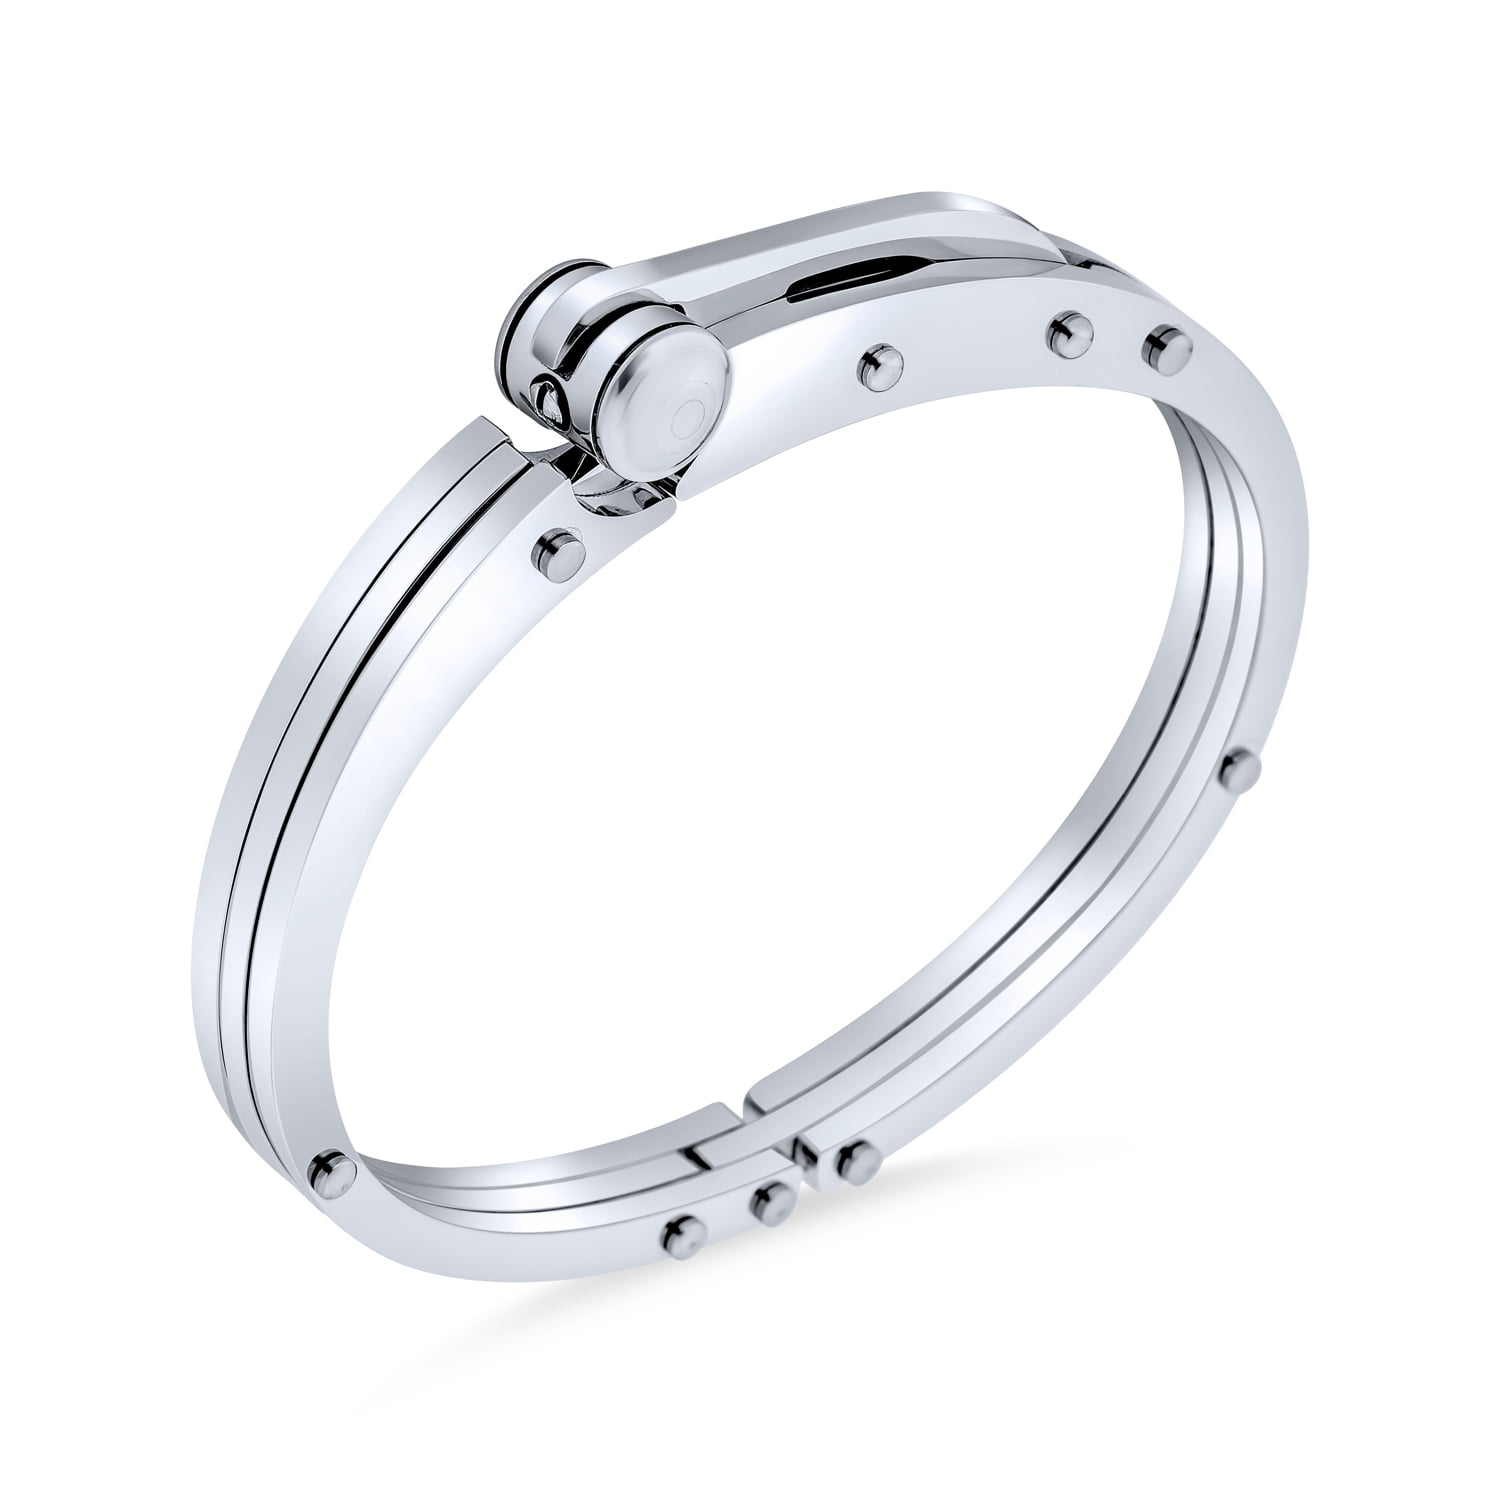 Adjustable Wire Cuff Bangle Bracelet, Photo Charm Bracelet, Stainless Steel  Bracelet, Bling Charms, Bangle Charms, Stainless Steele Jewelry 